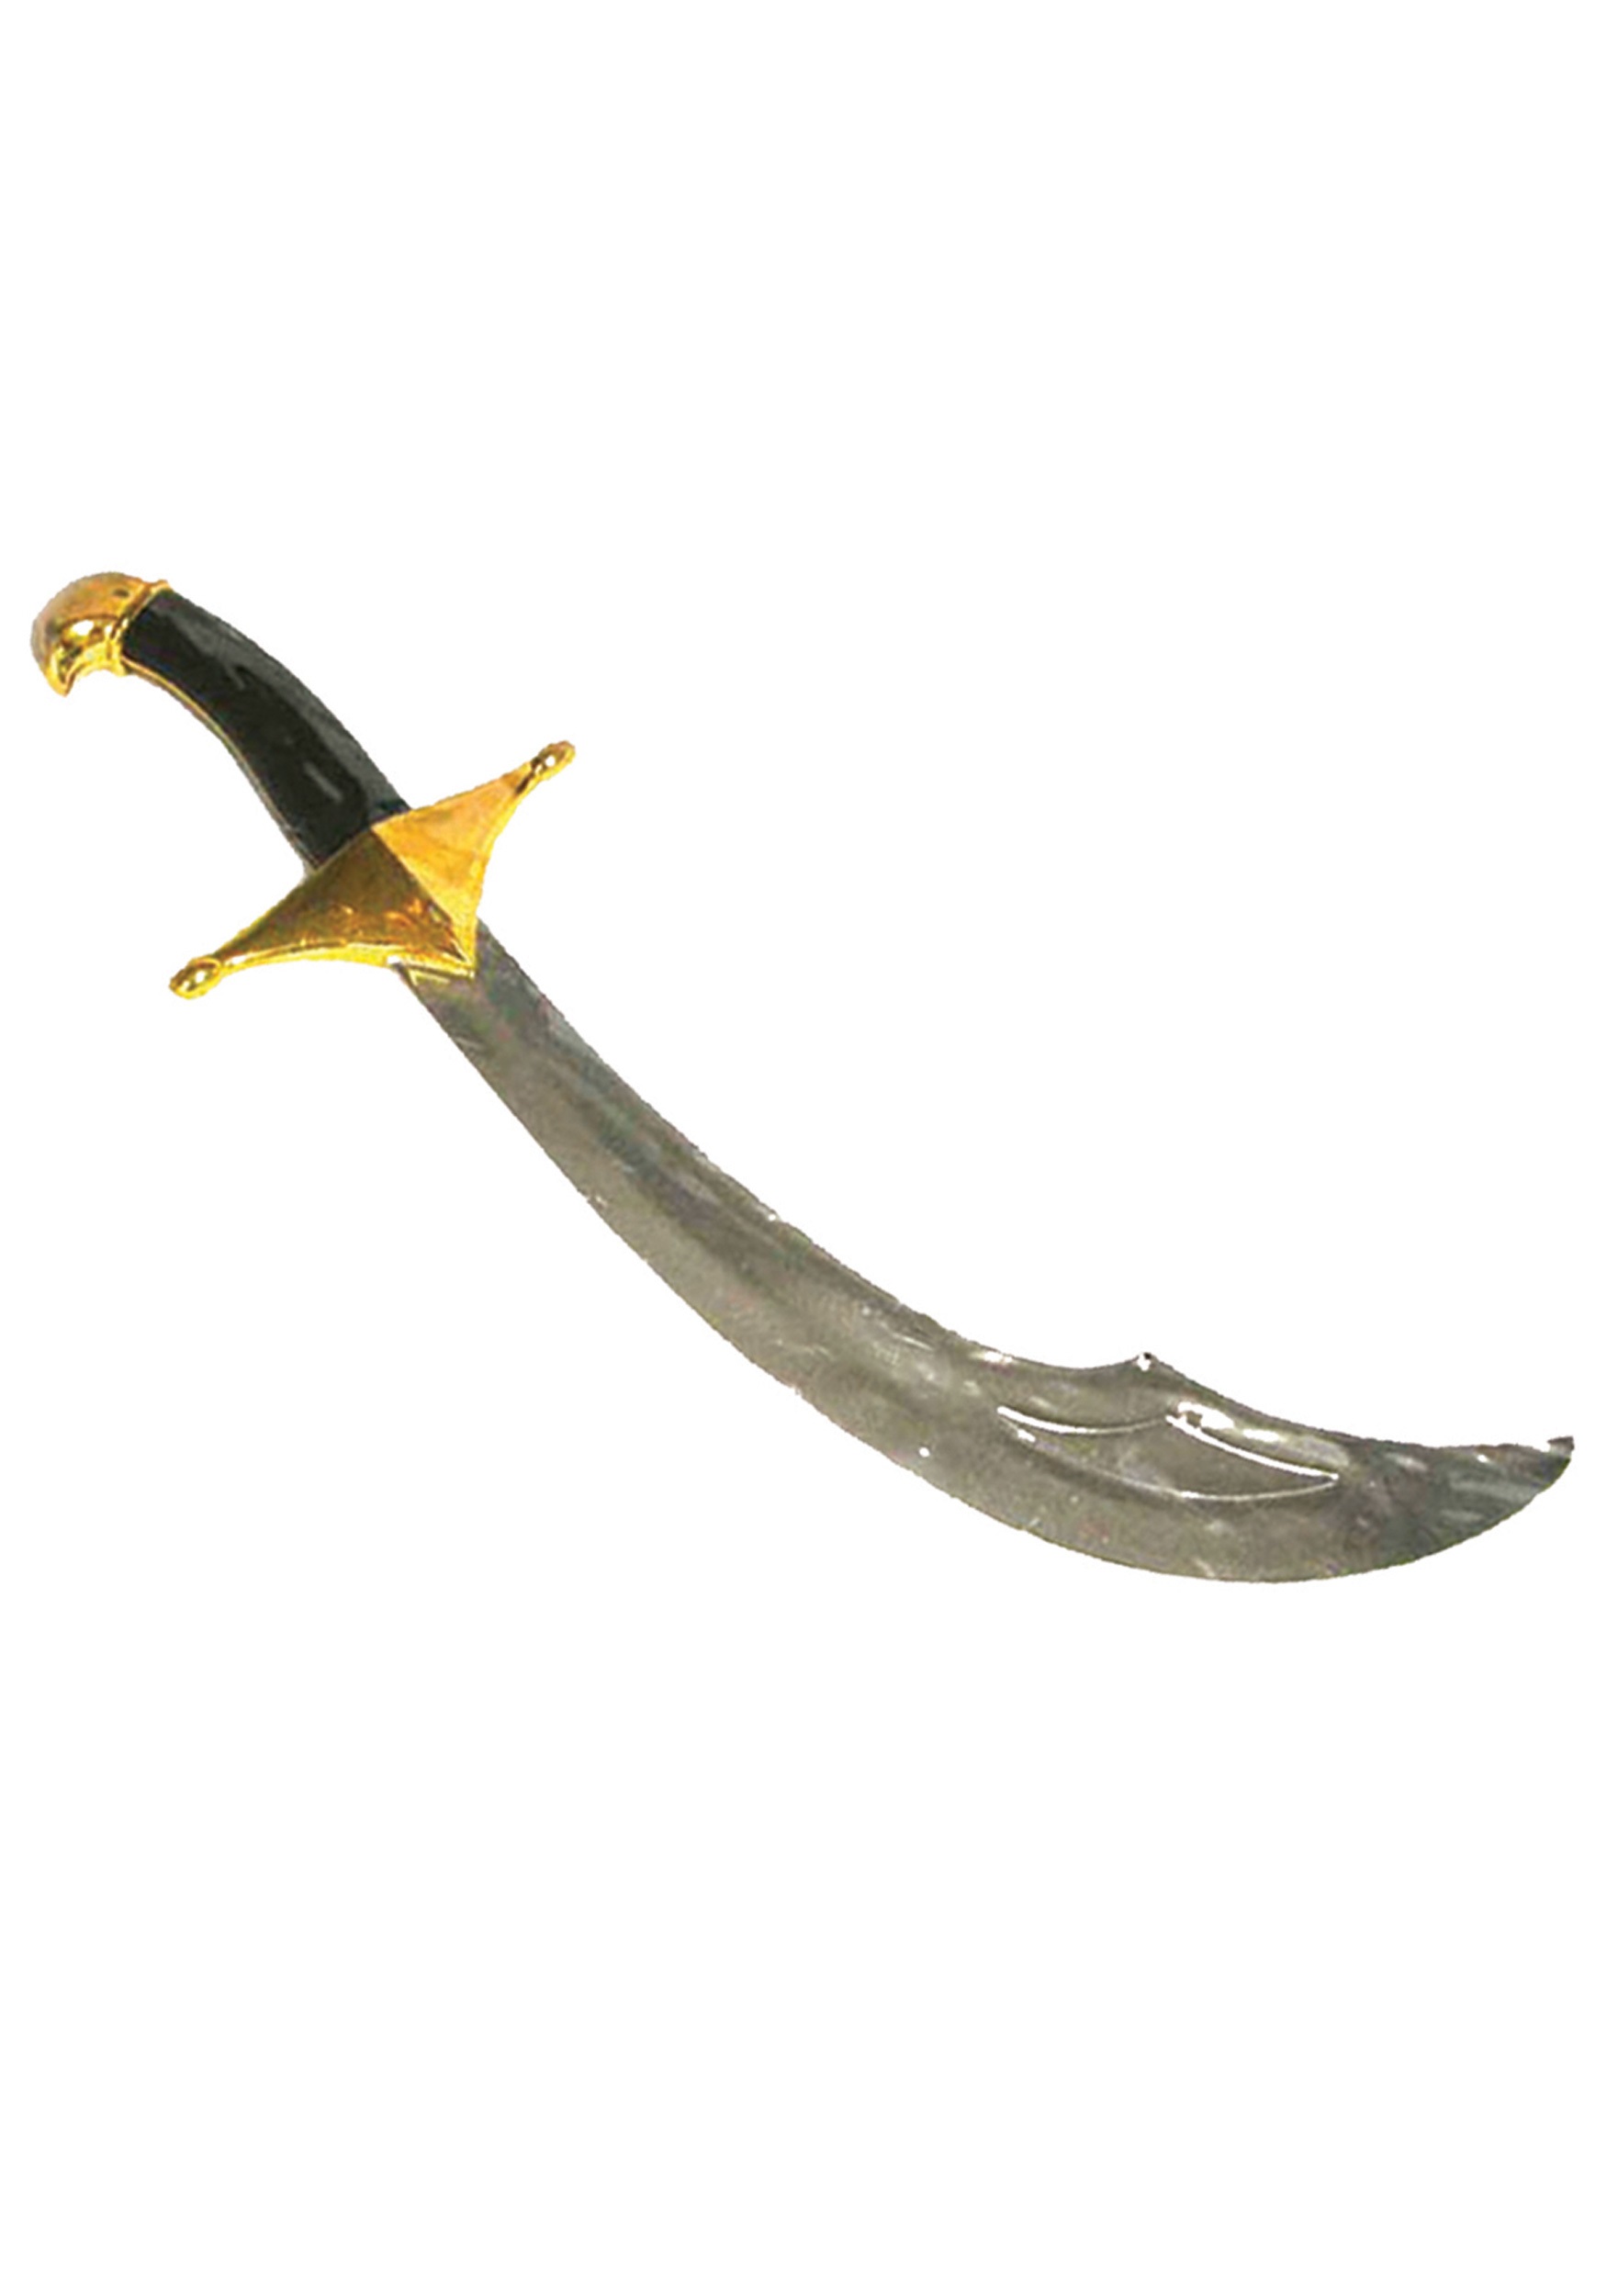 Toy Cutlass Sword Accessory